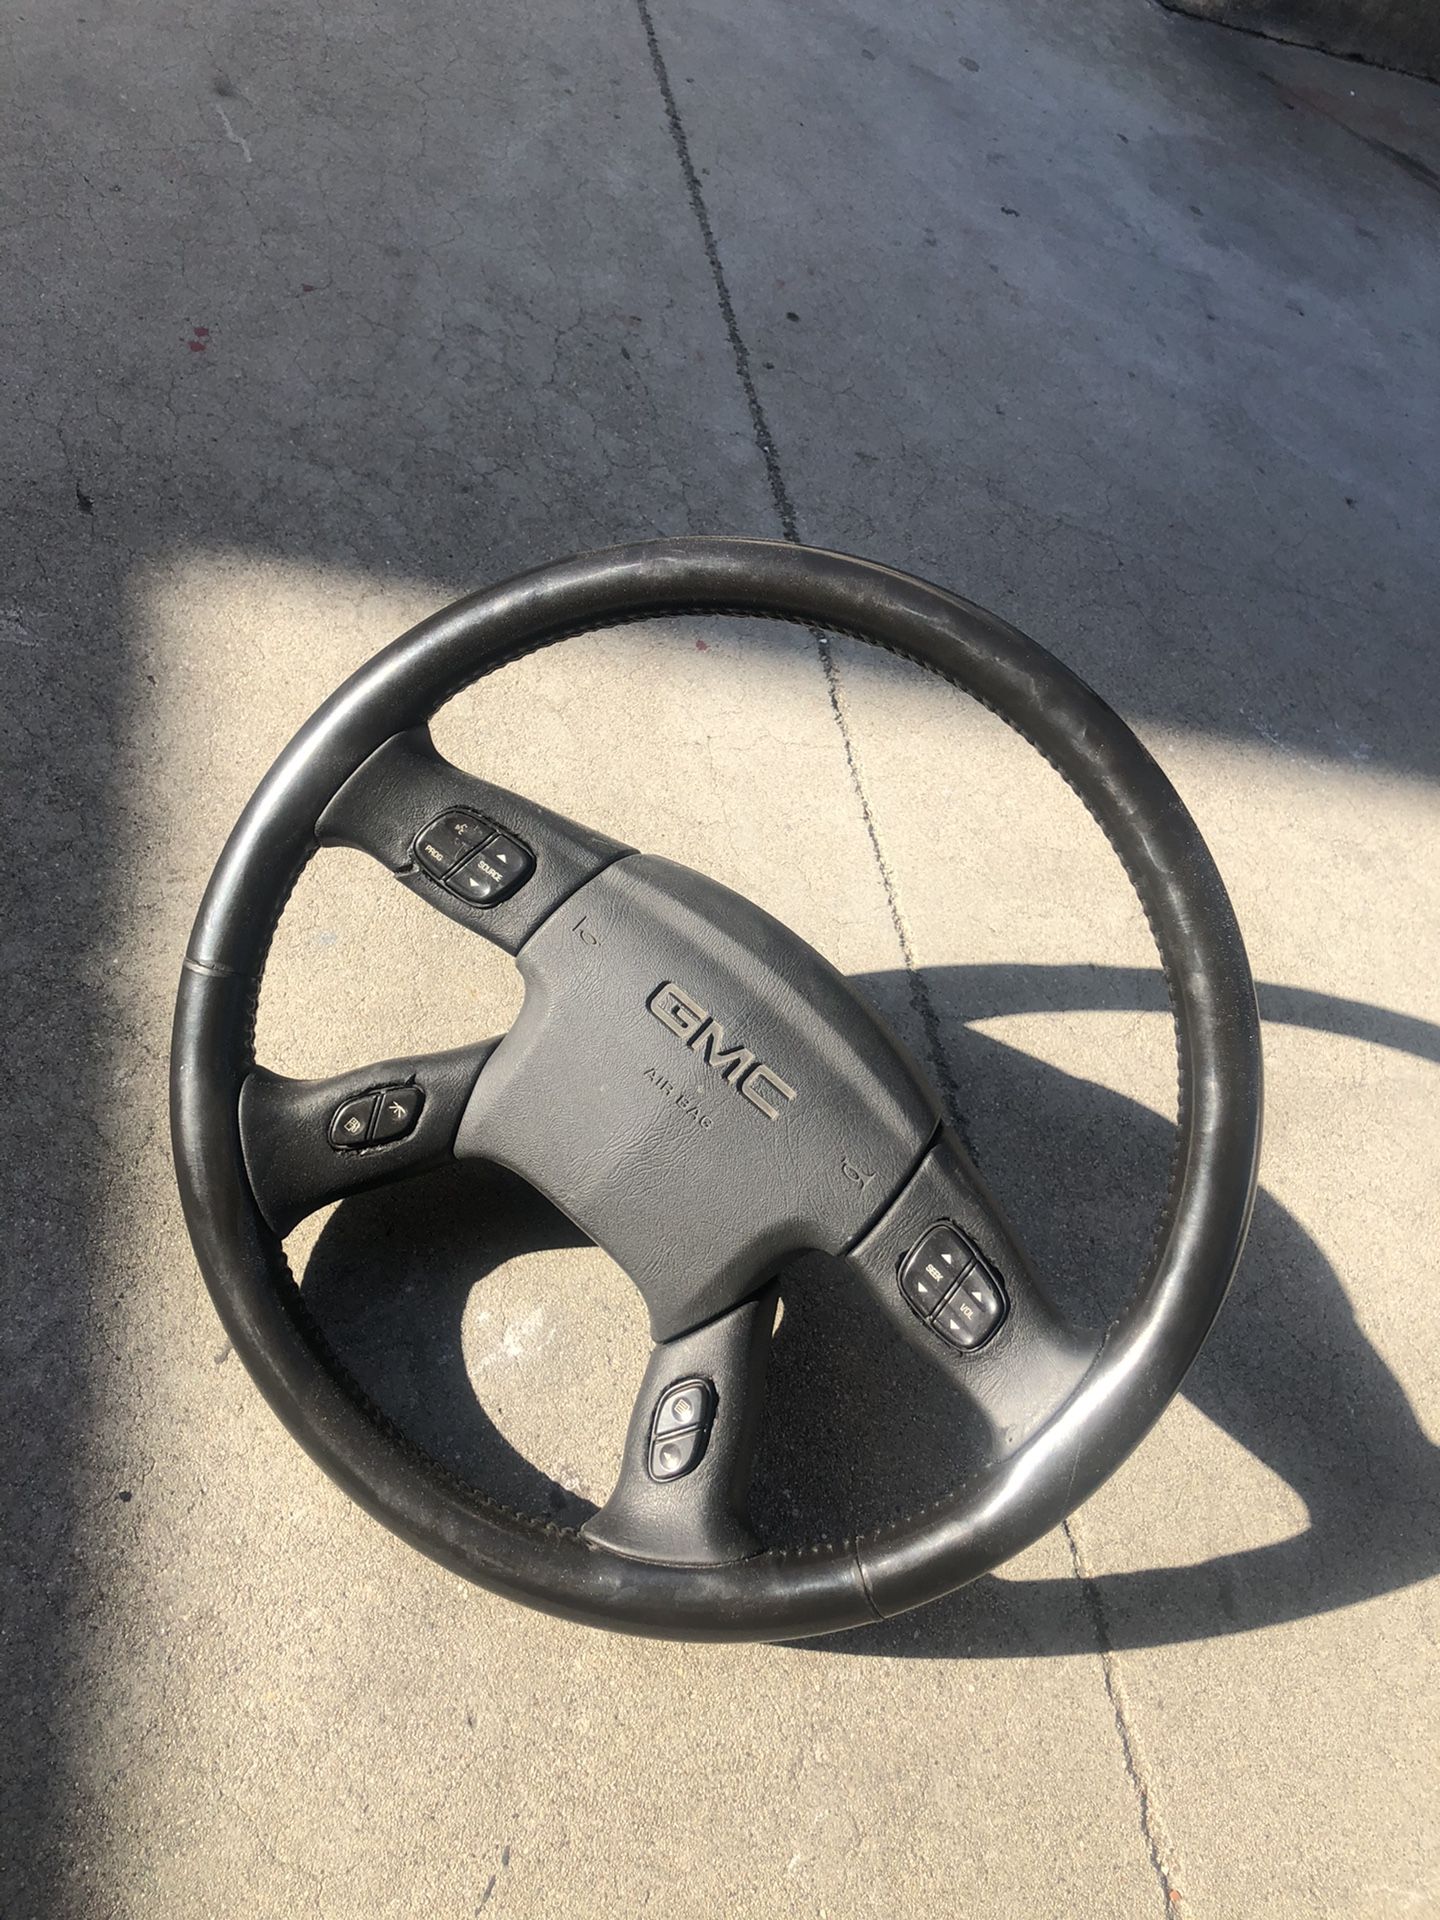 Gmc steering wheel